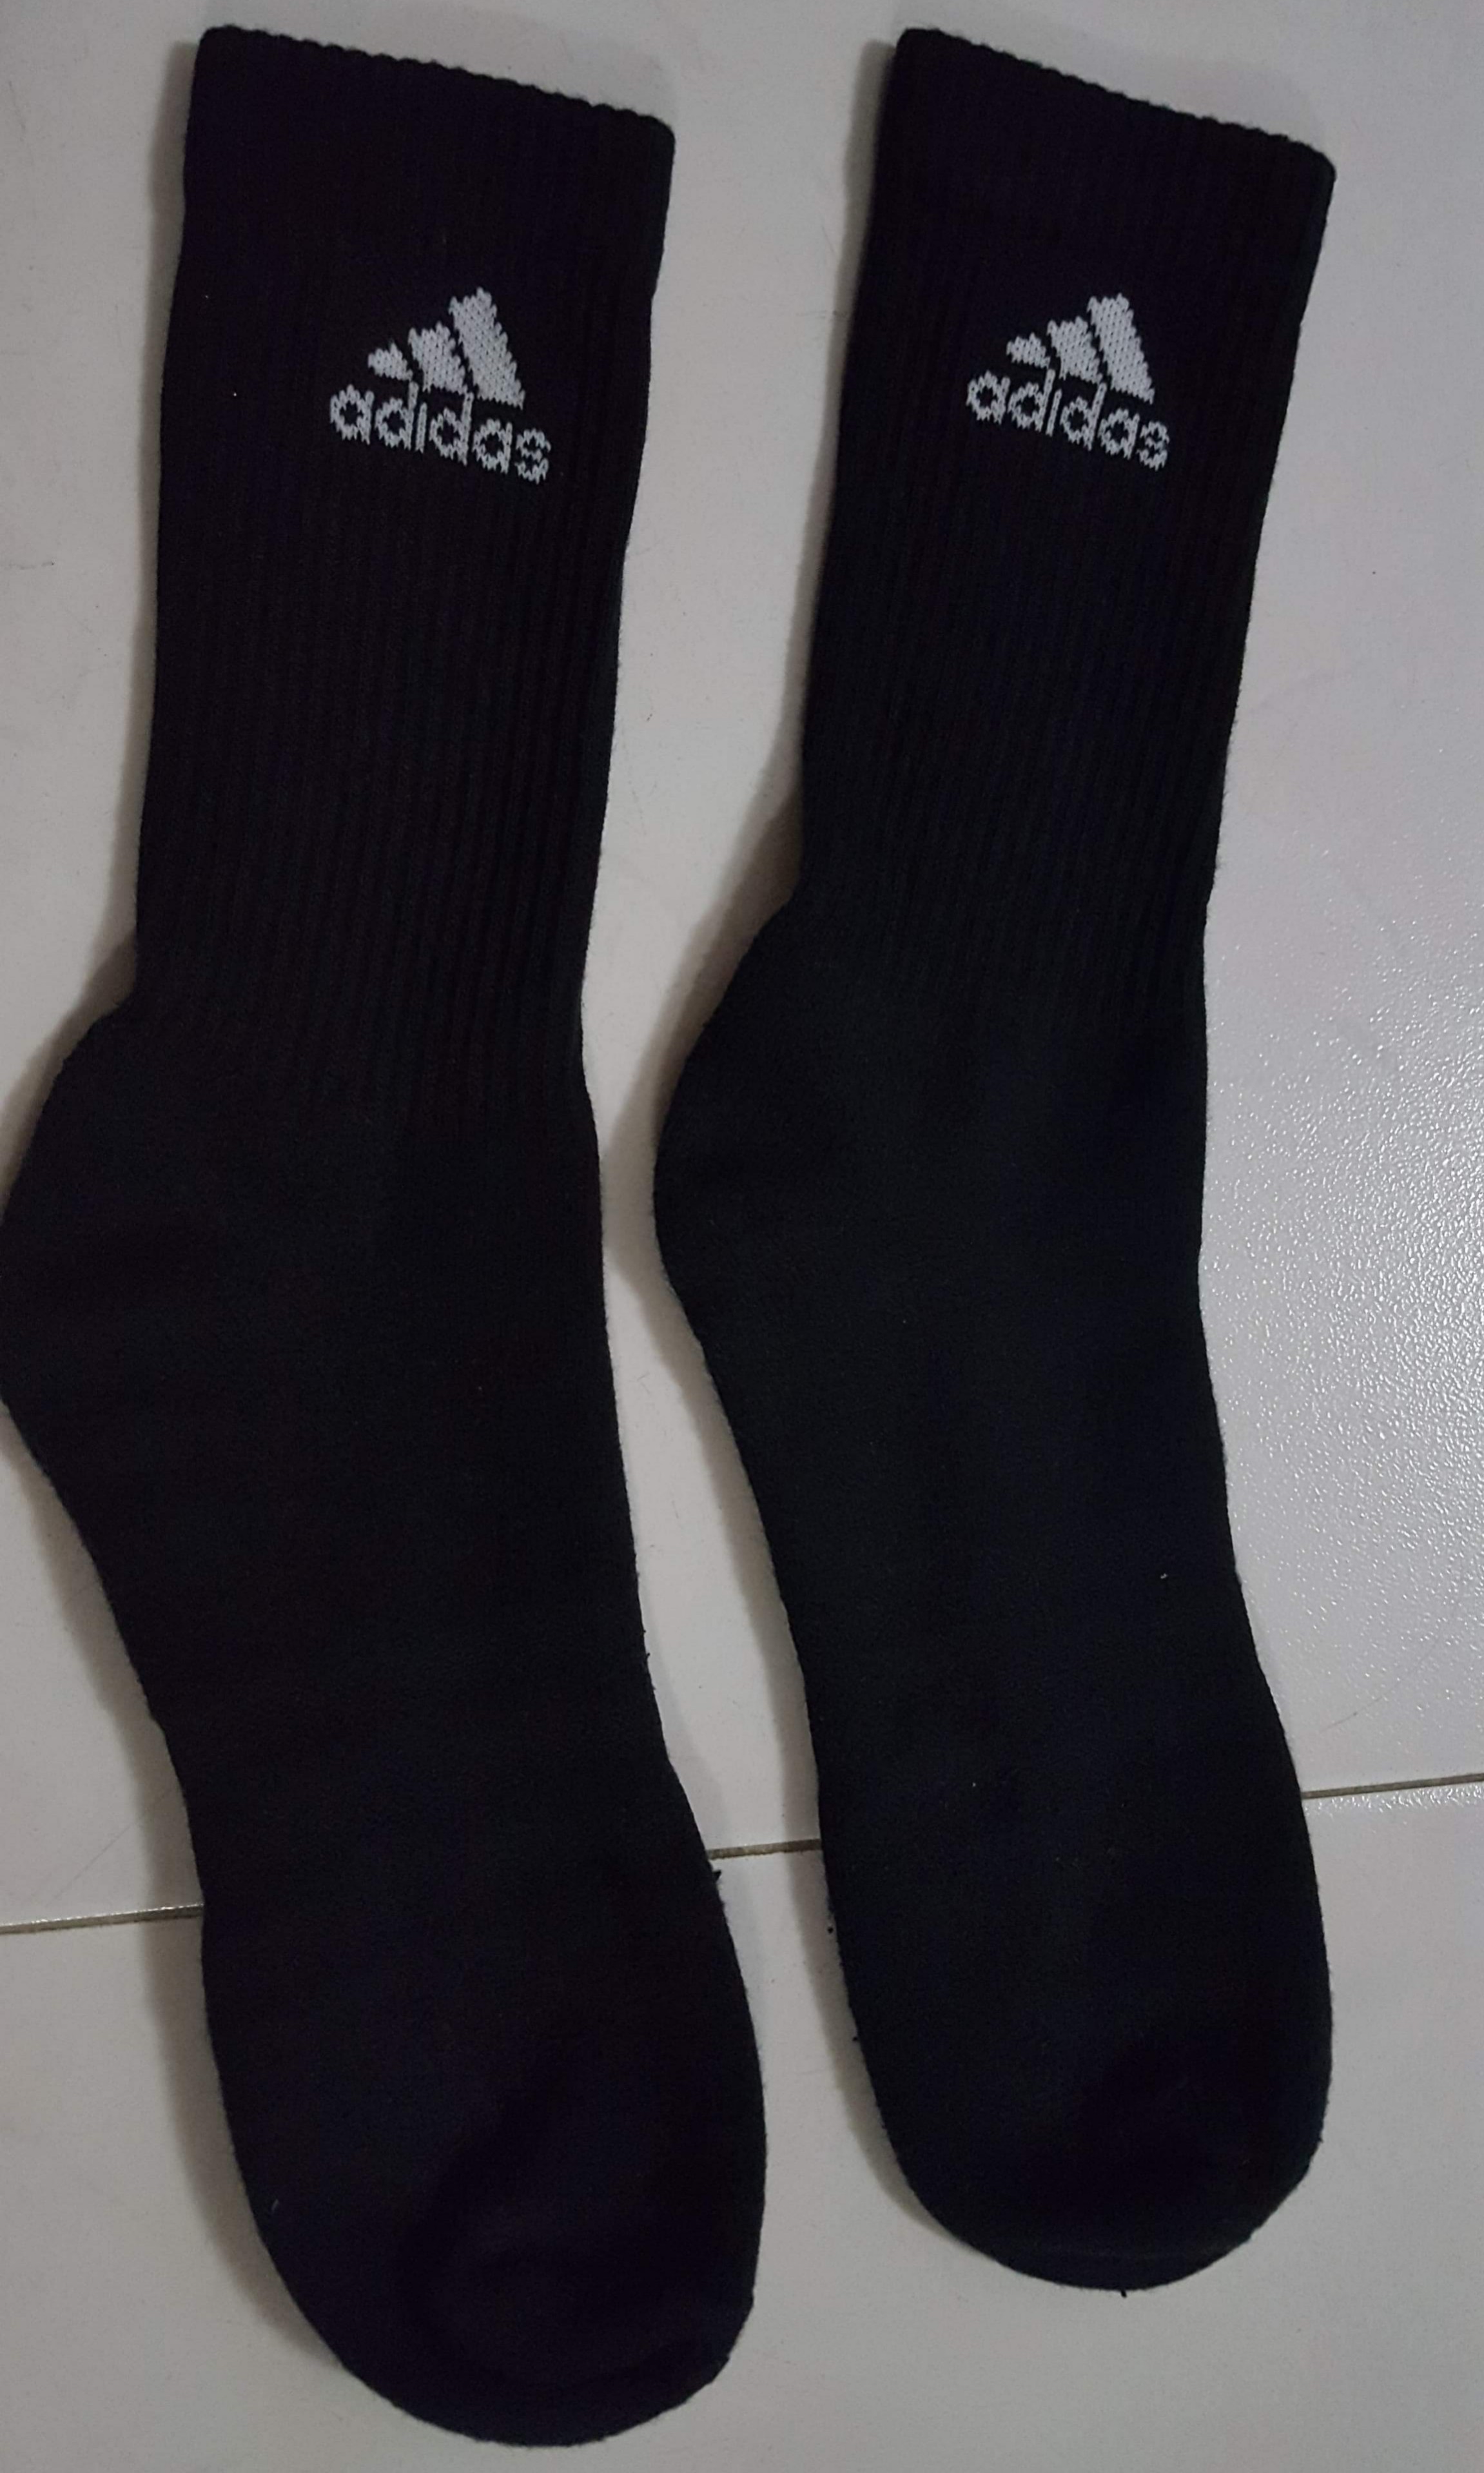 kanye adidas socks